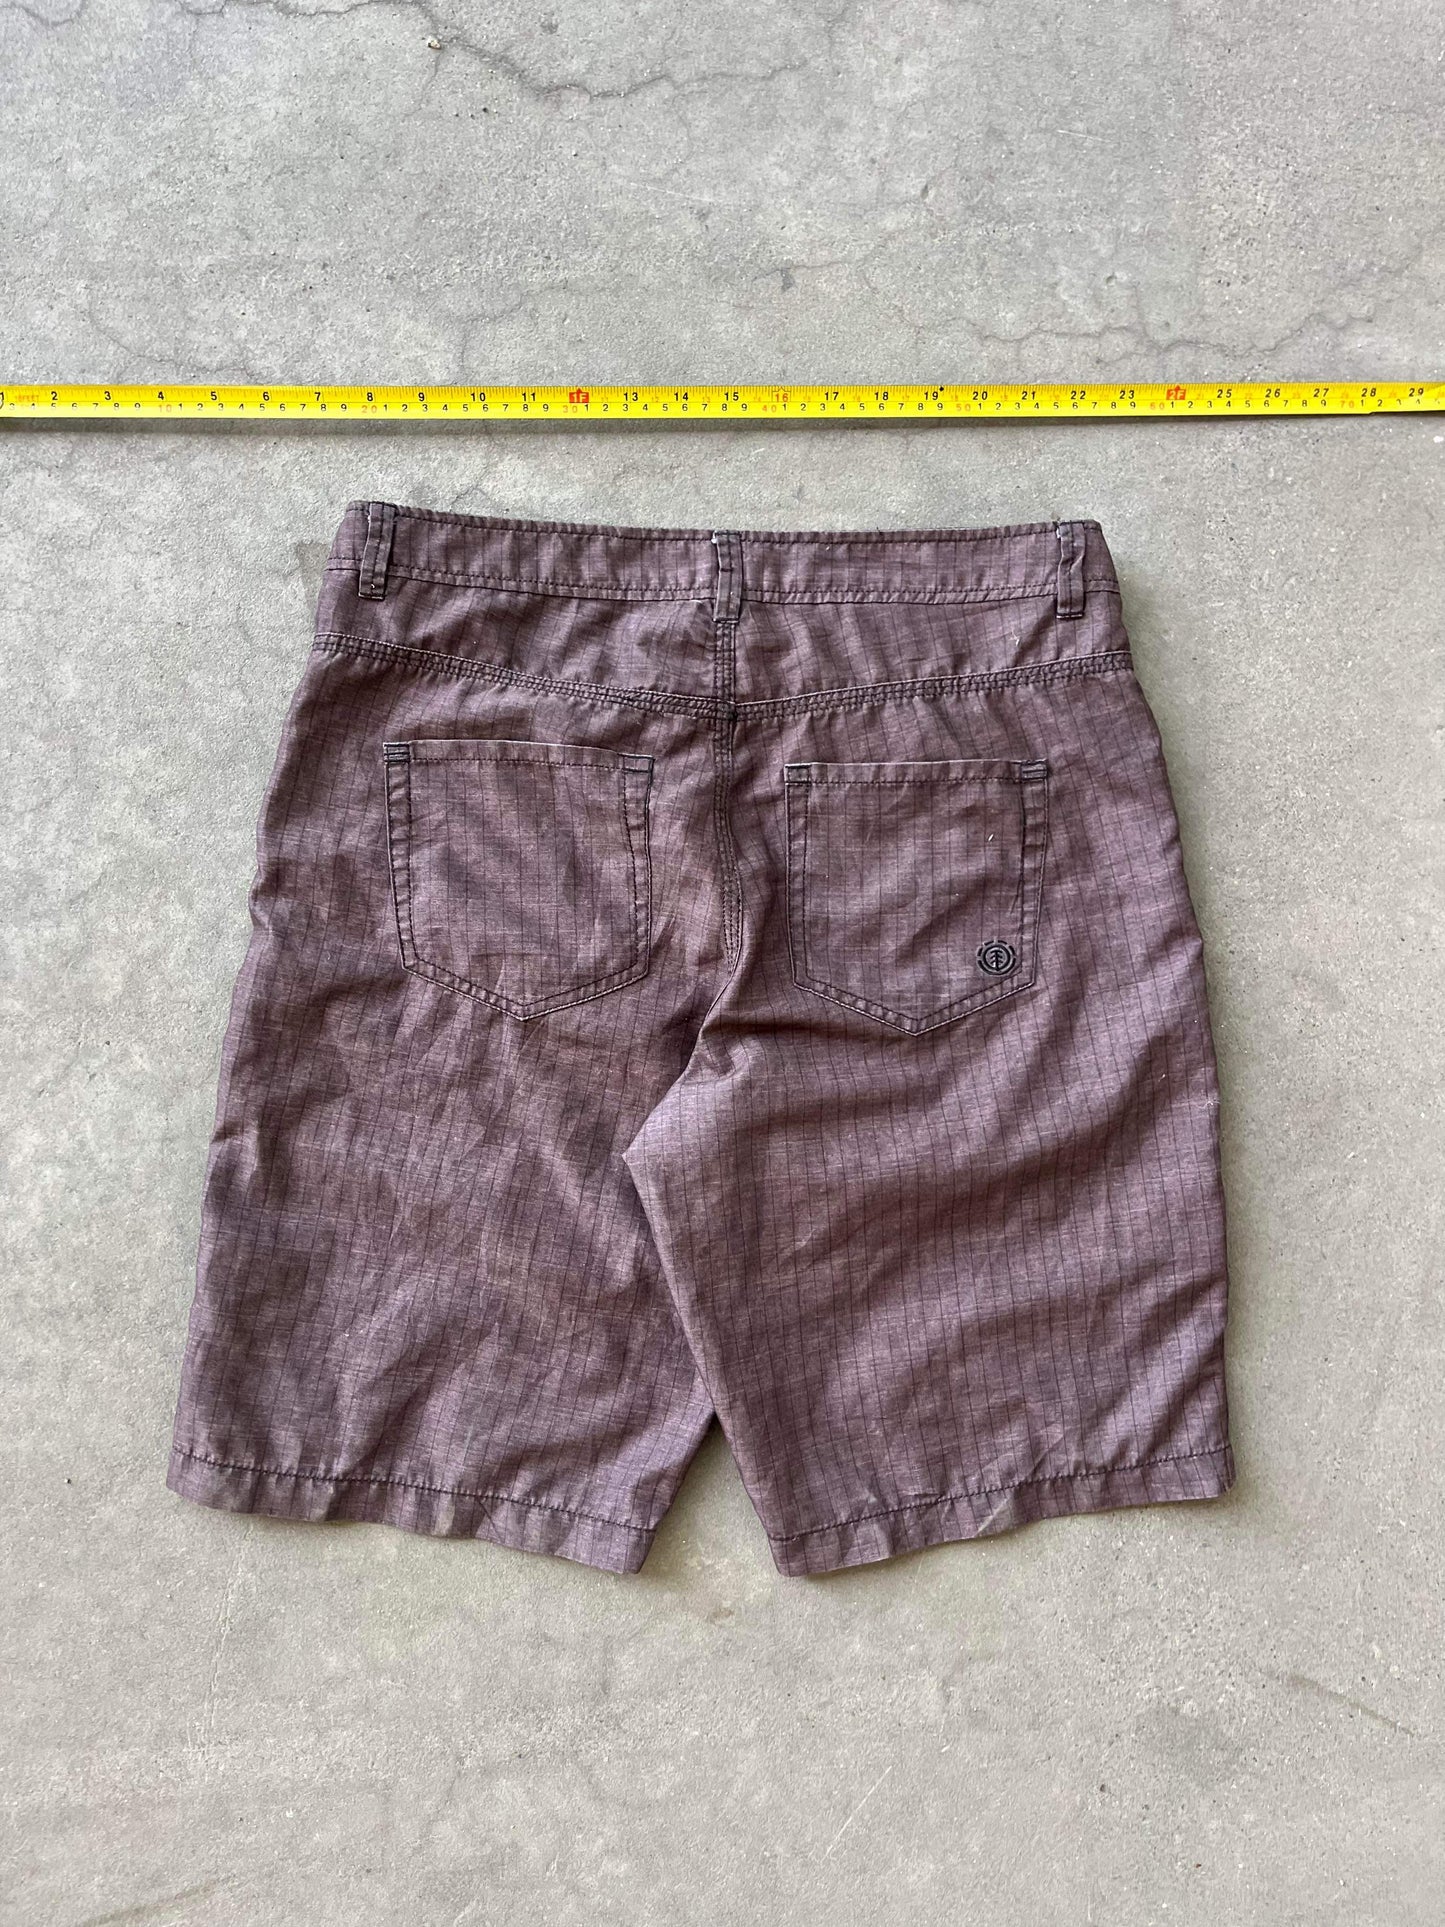 (30”) Element Y2K Shorts